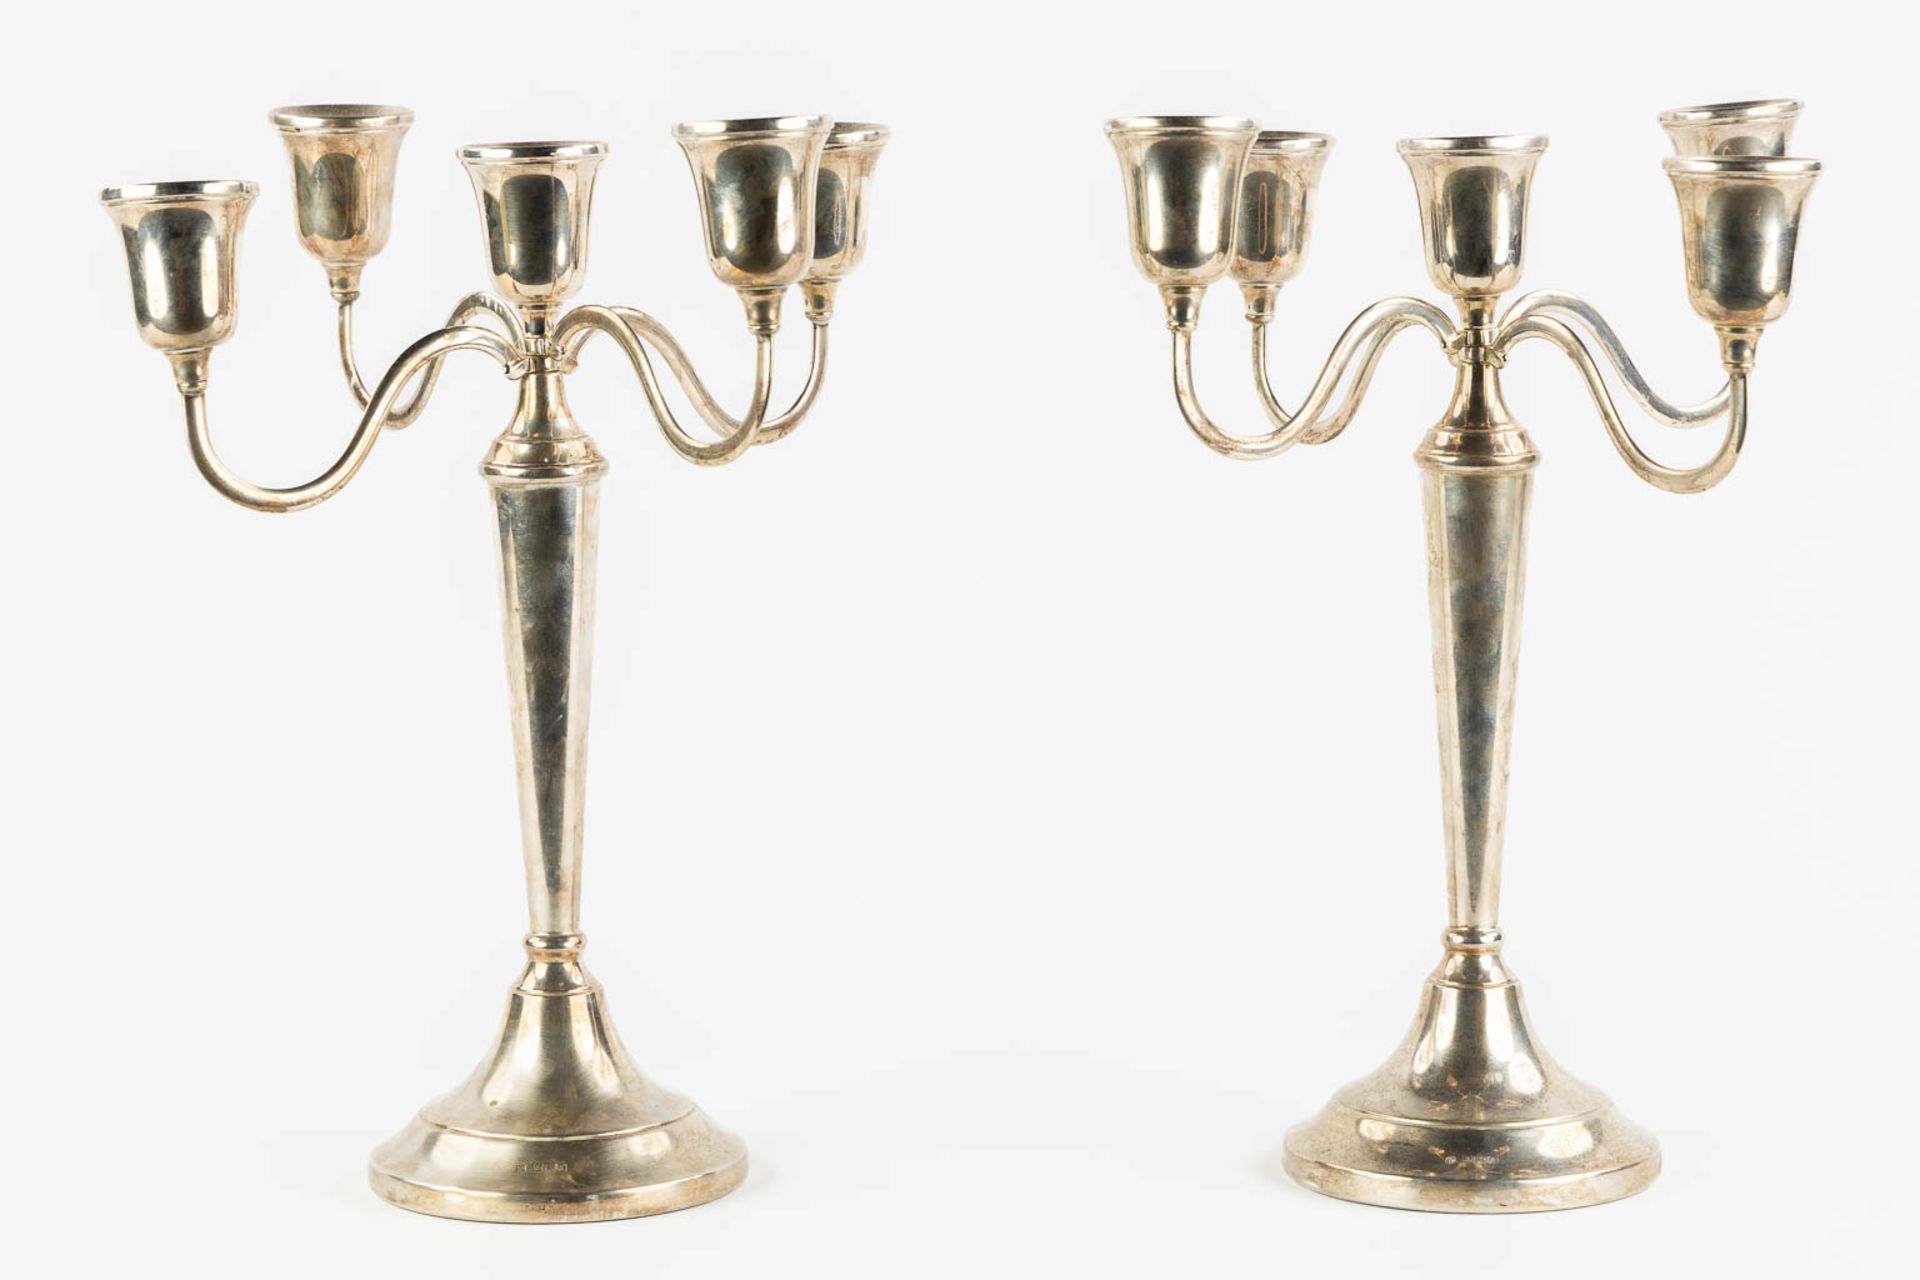 David Shaw Silverware Ltd, A pair of silver candelabra. 1992. (L:28 x W:28 x H:34 cm) - Image 3 of 12